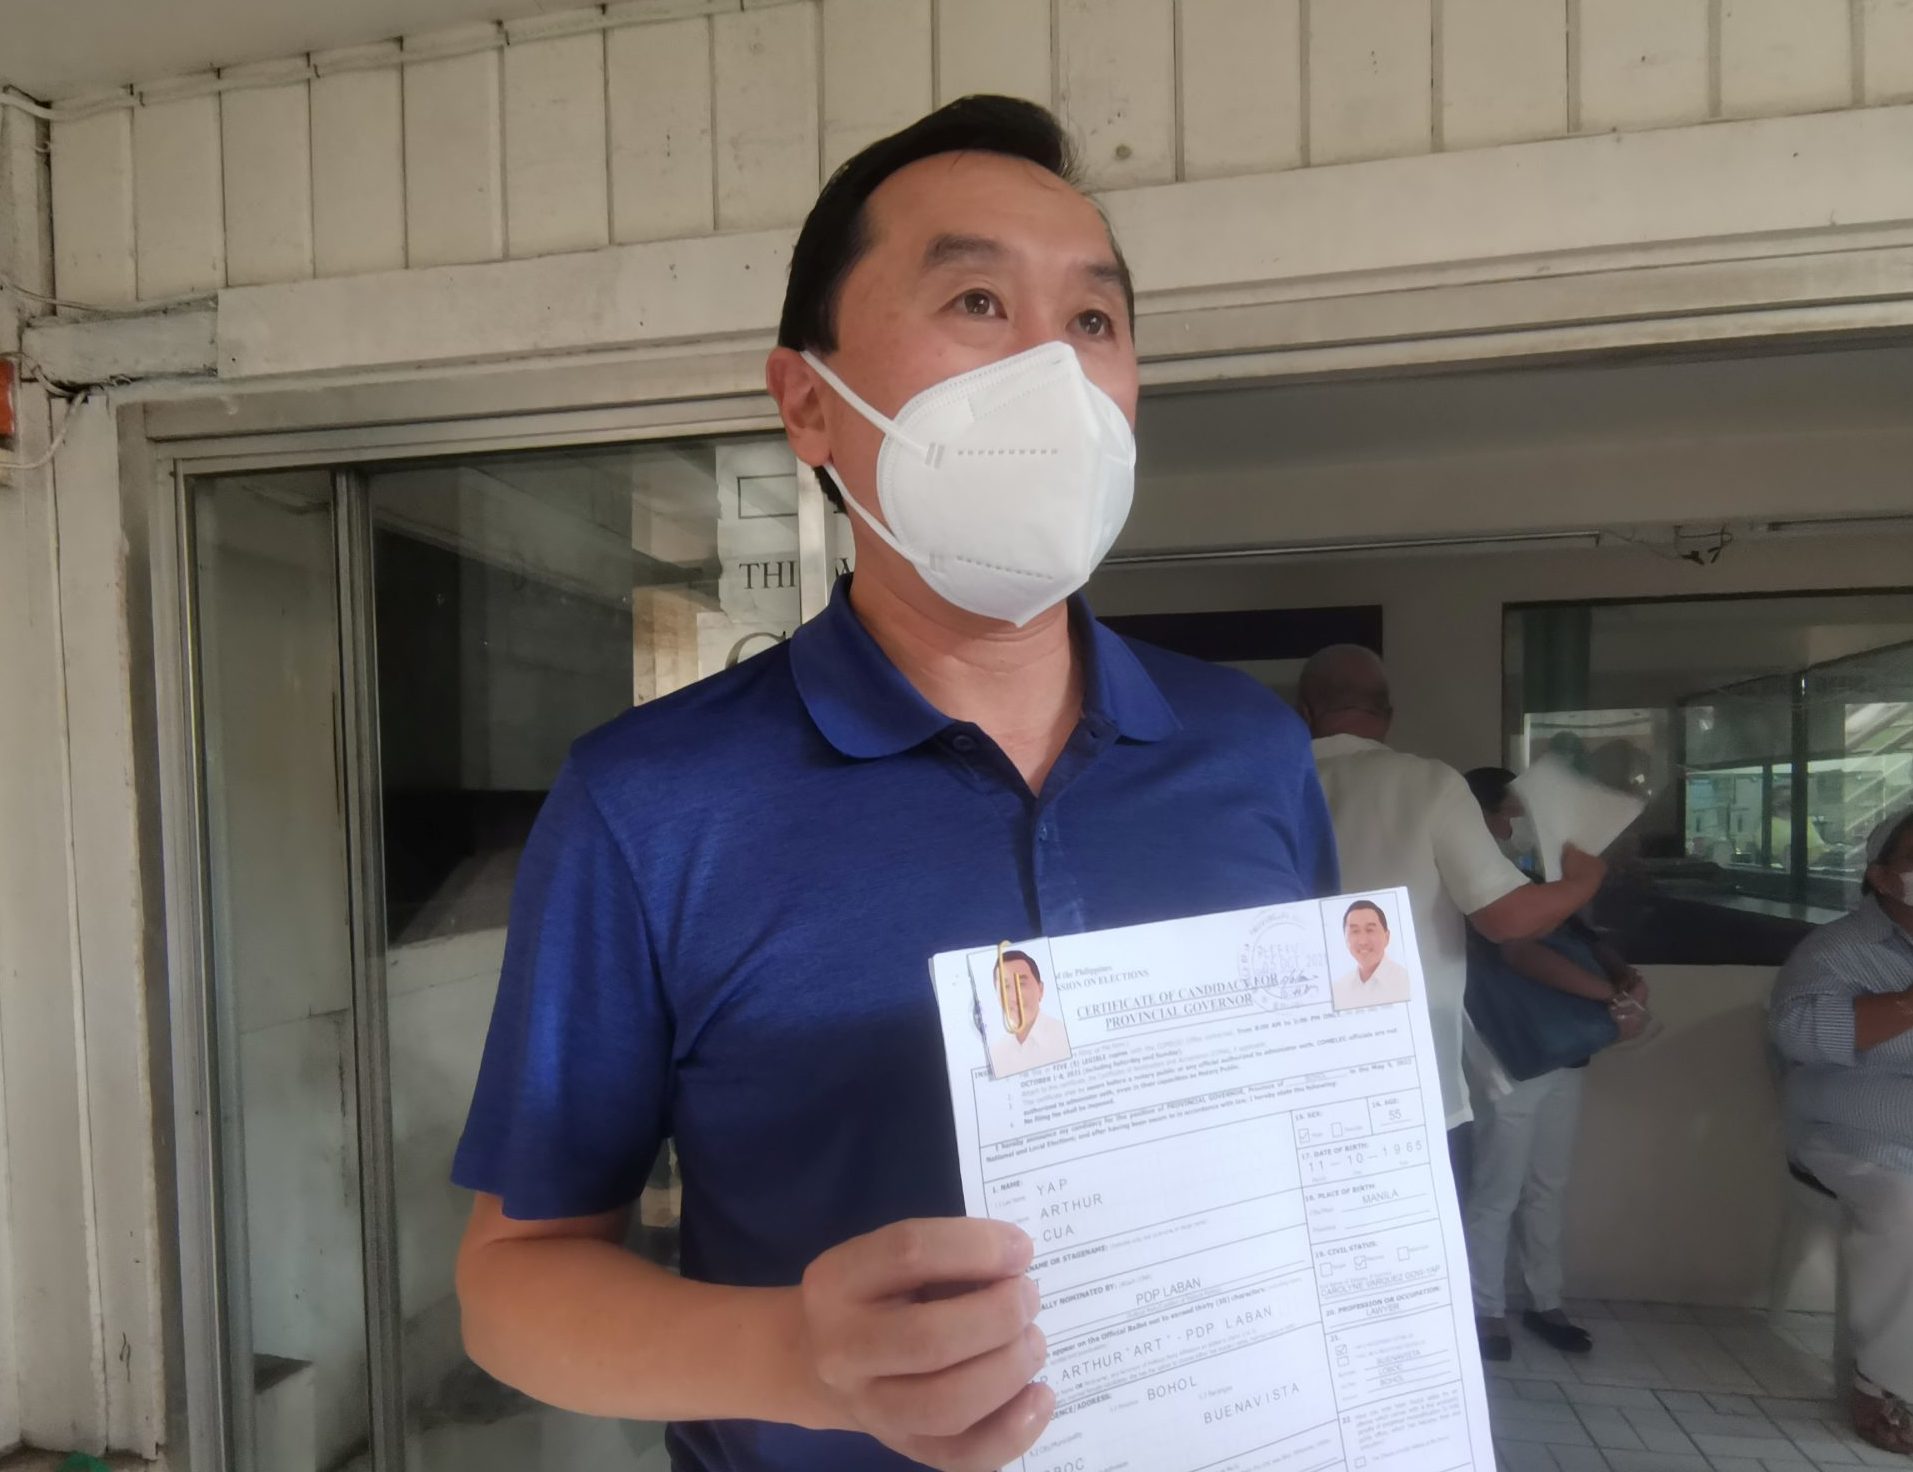 Bohol Gov. Arthur Yap files COC for reelection